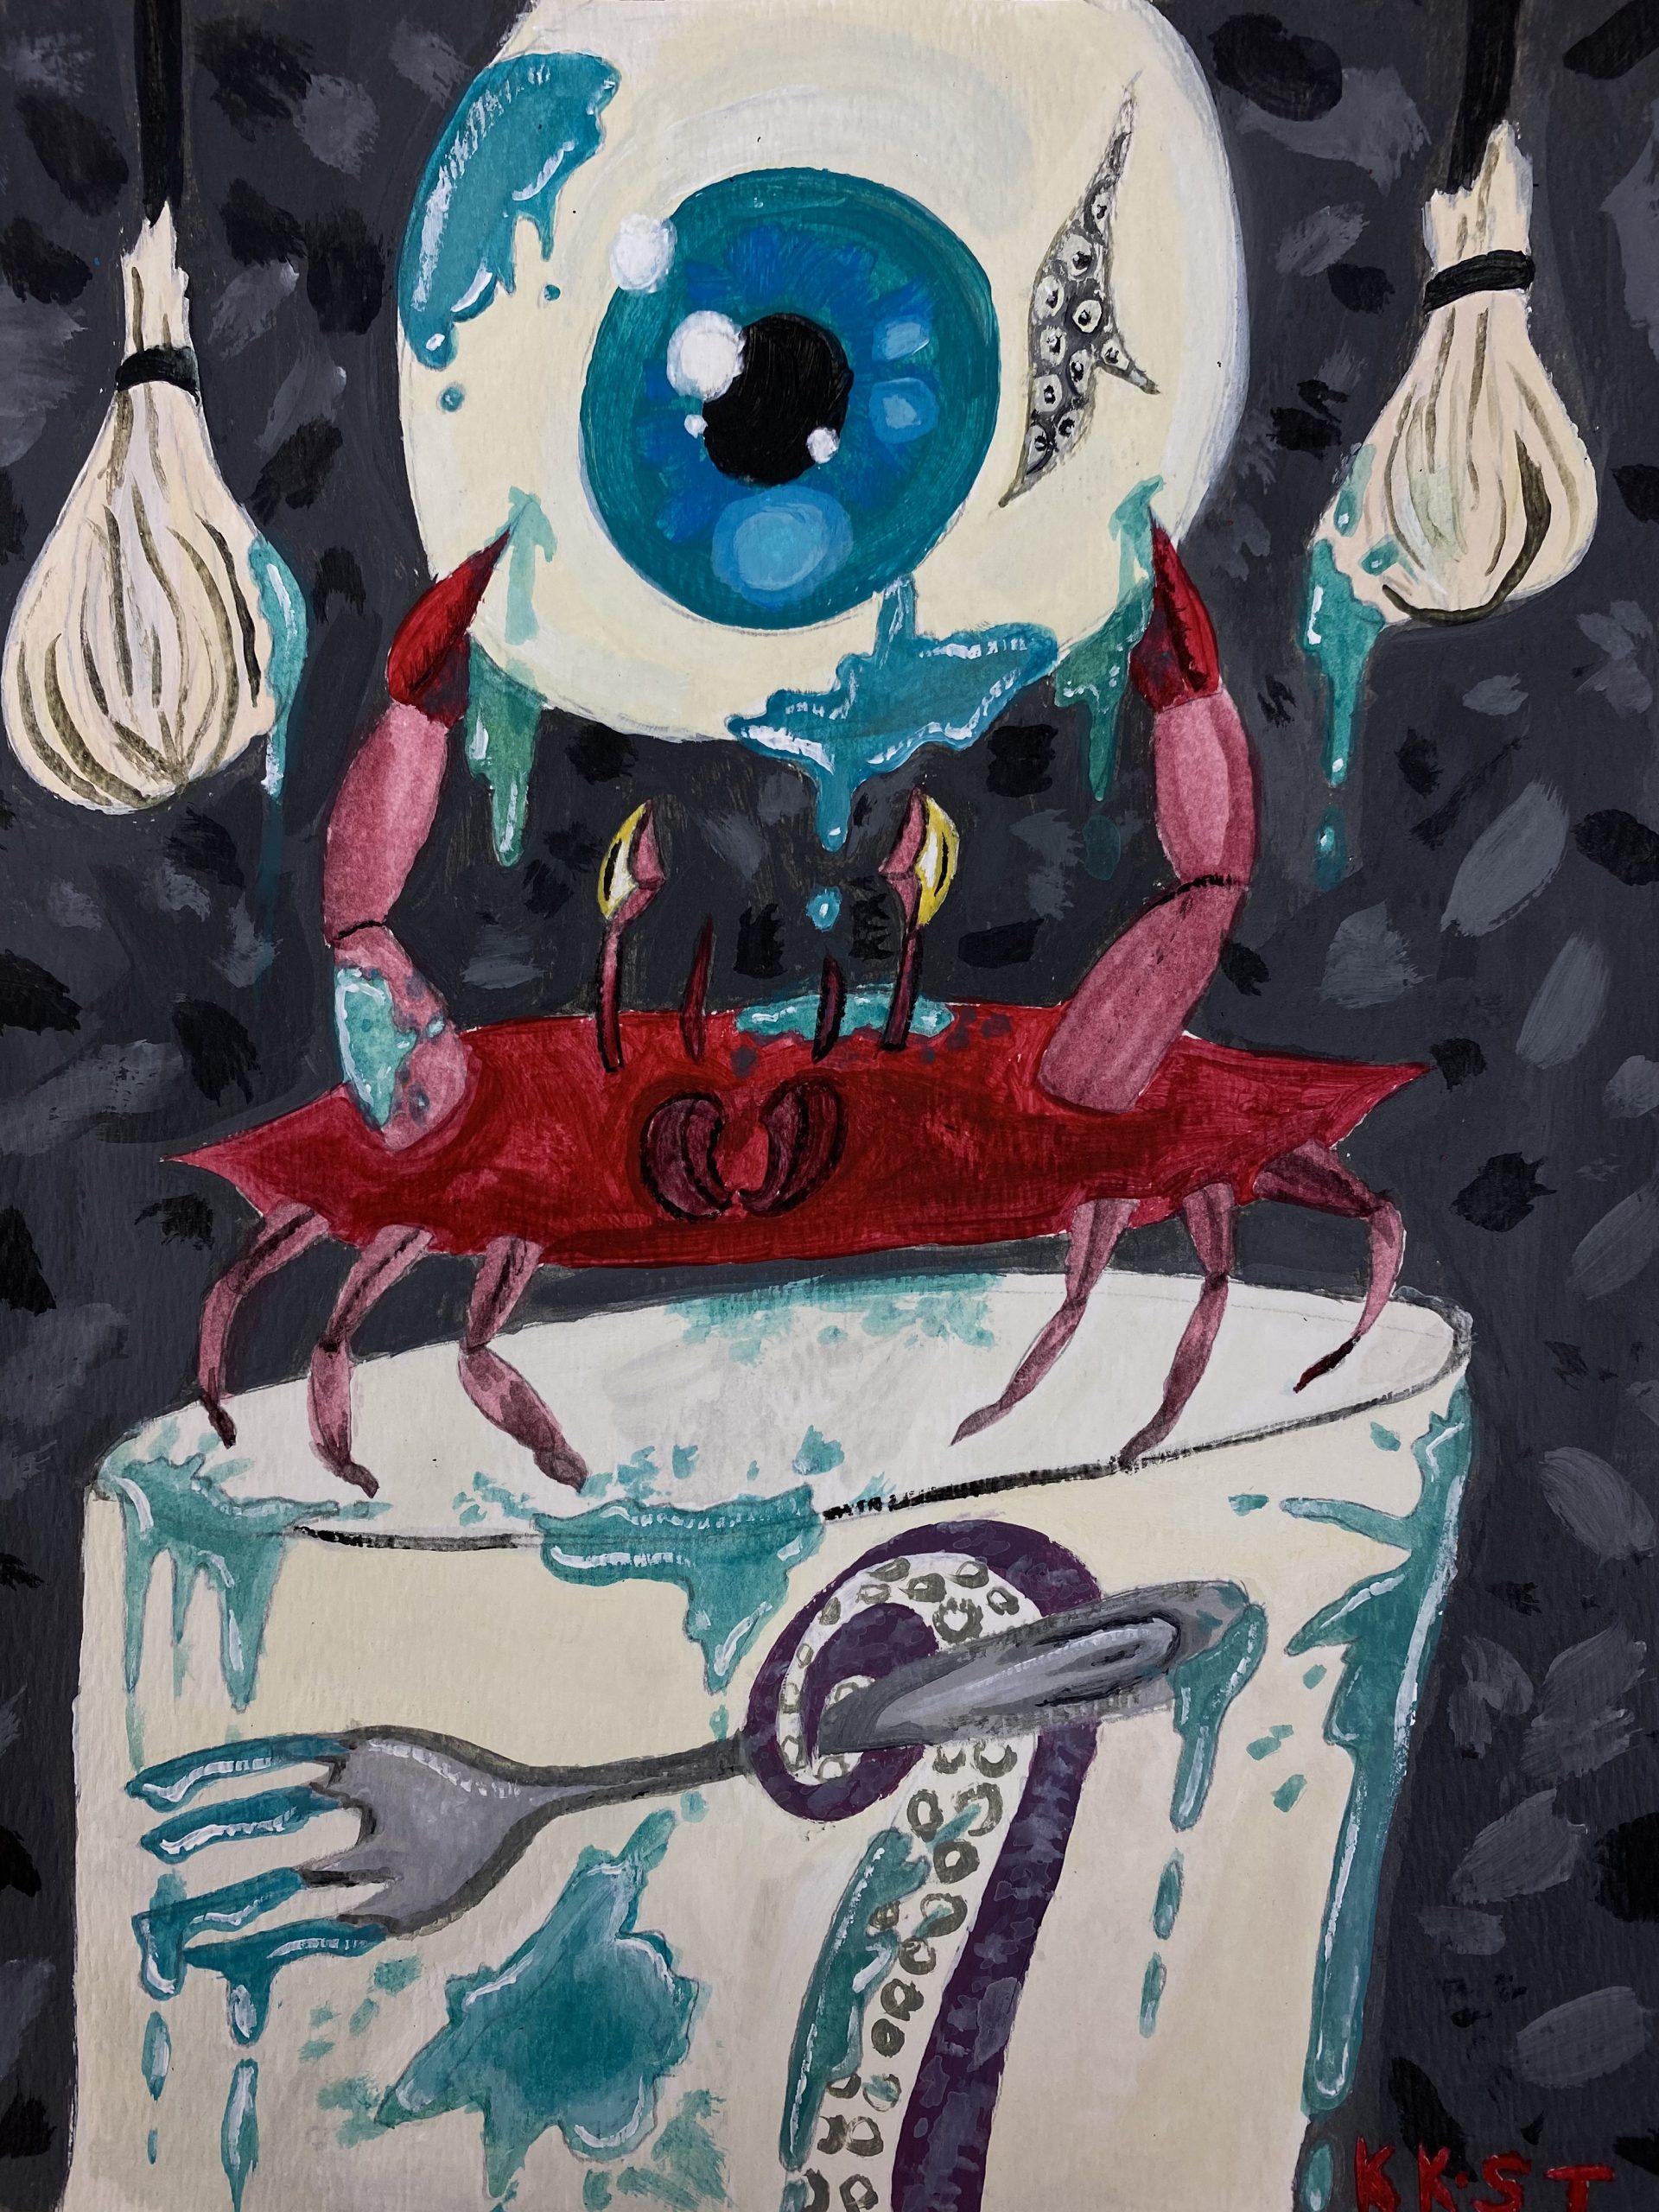 The Dali Museum’s 2021 Student Surrealist Exhibit Online: Pinellas, Artwork by Kendall Kenas
King Crab
Hopkins Middle
Teacher: Krista Schilling
Grade 6